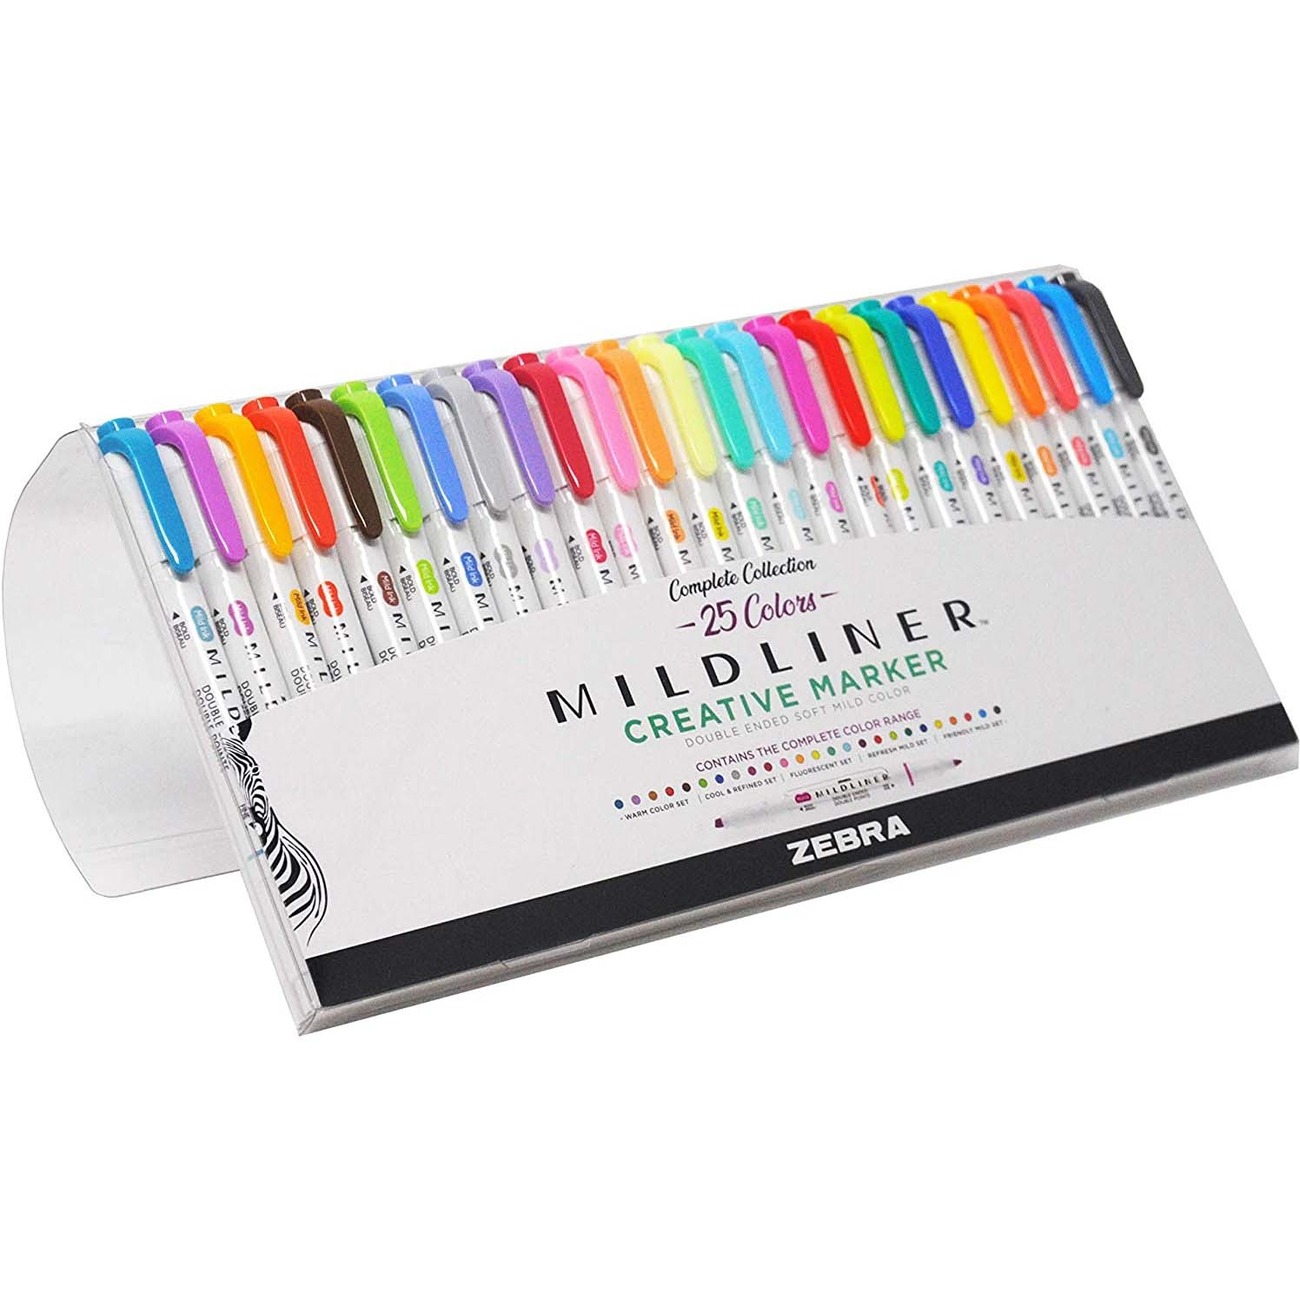 Zebra Mildliner 5-Pack - Tokyo Pen Shop